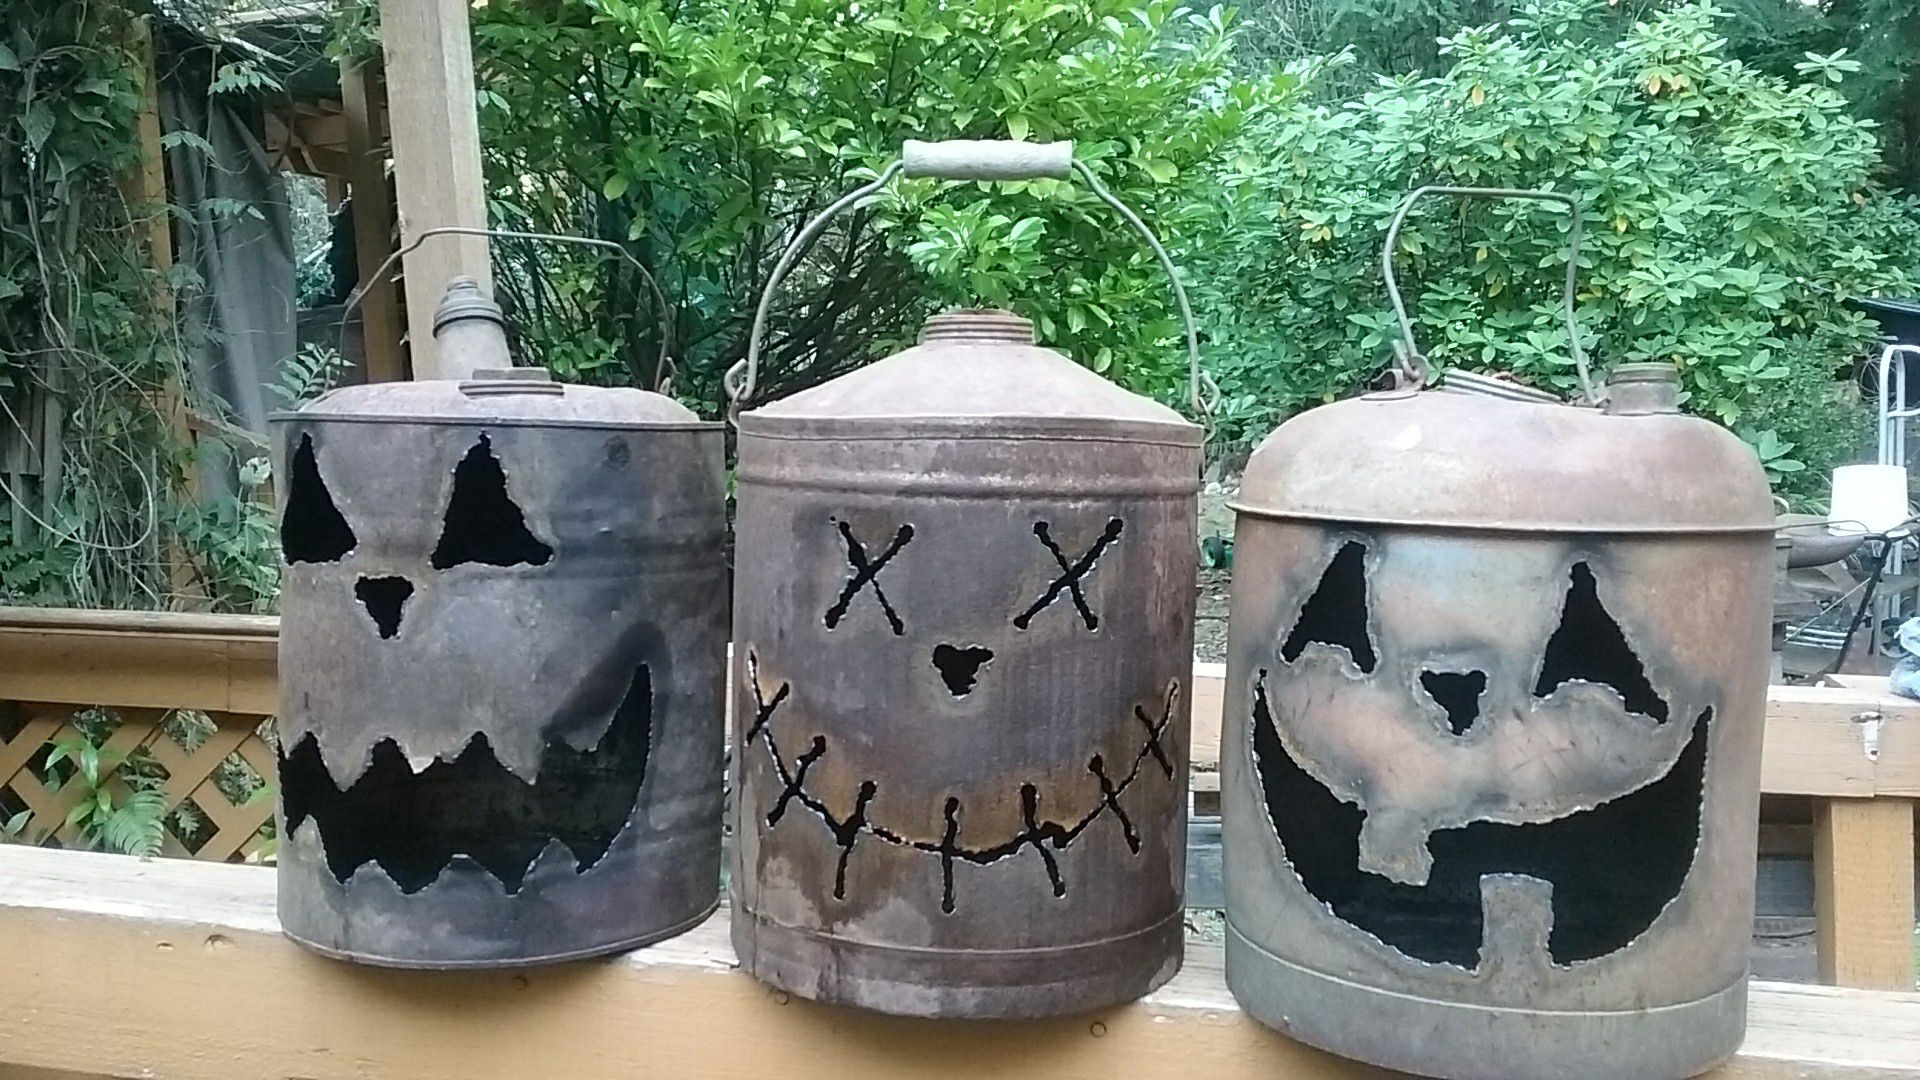 Halloween jack o lanterns